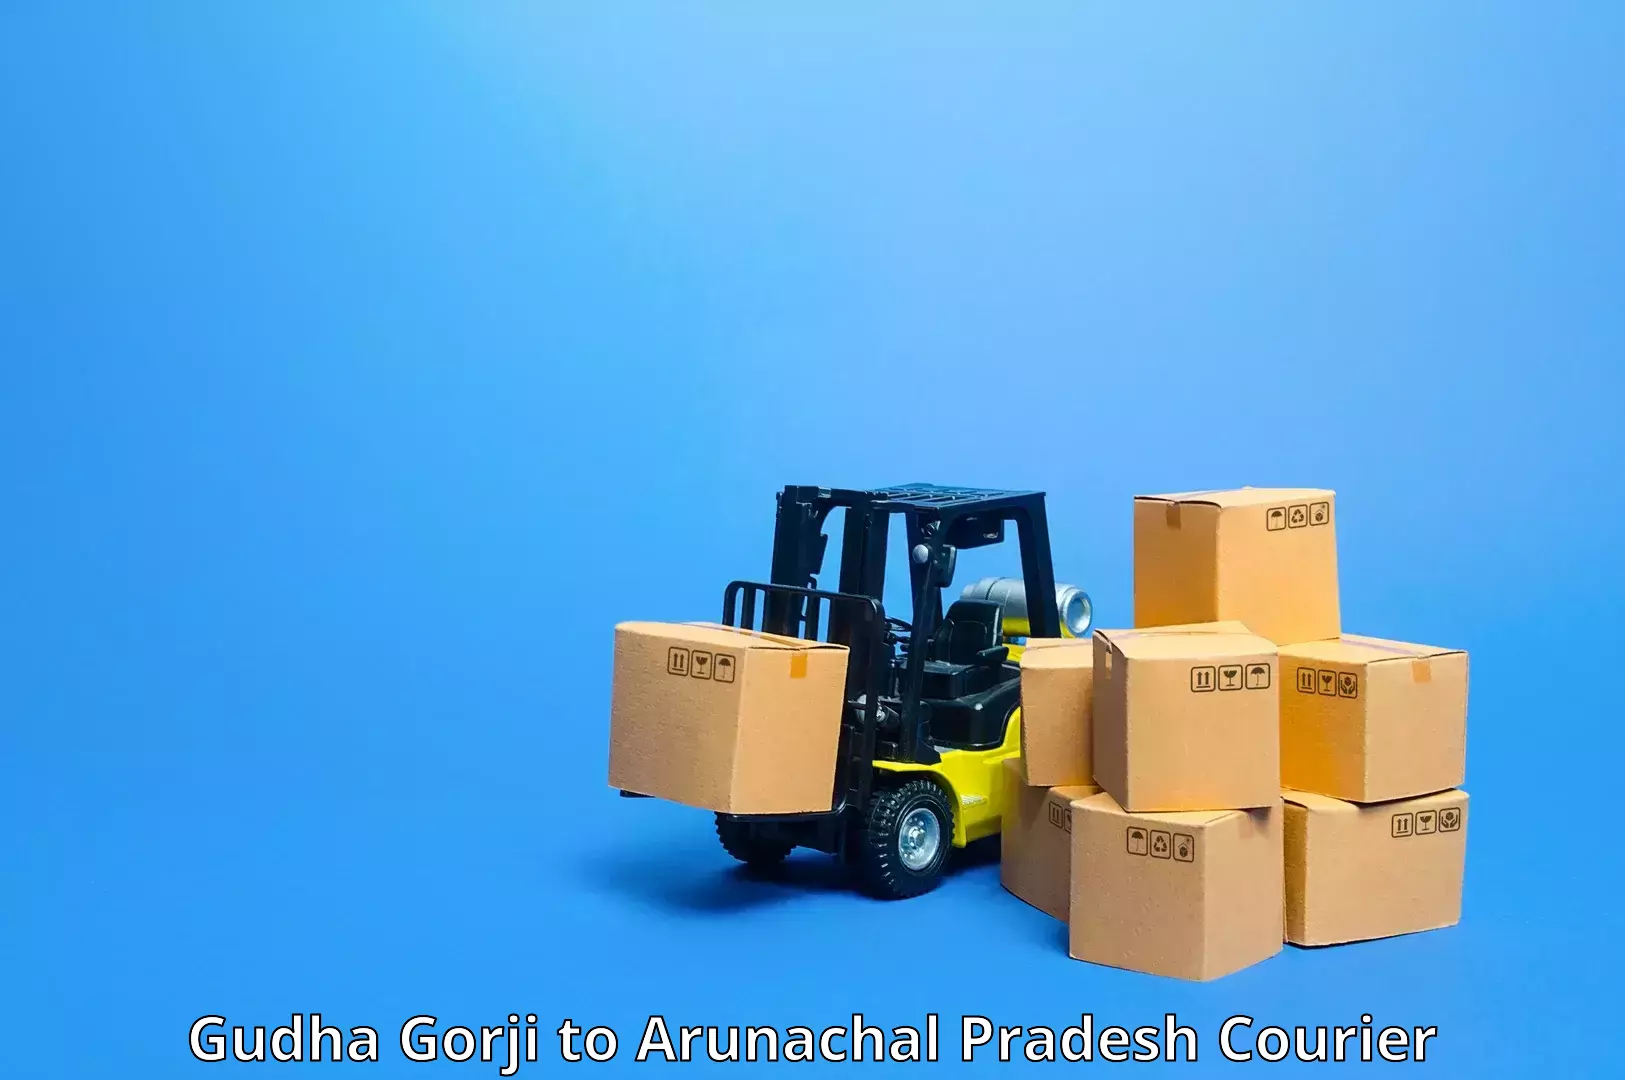 Express delivery network Gudha Gorji to Arunachal Pradesh